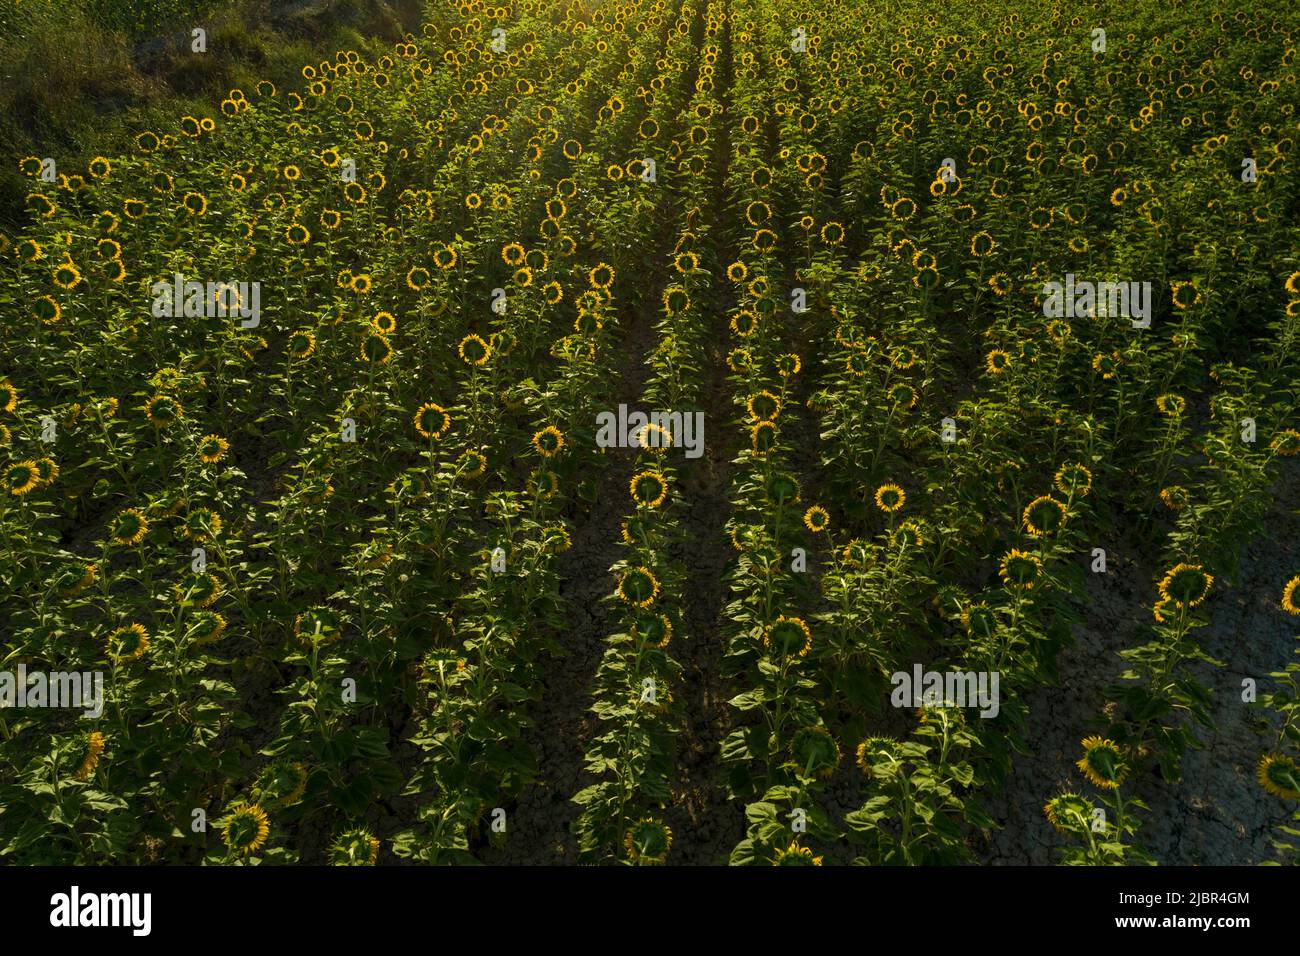 Summer sunrise over sunflower field - stock photo Stock Photo